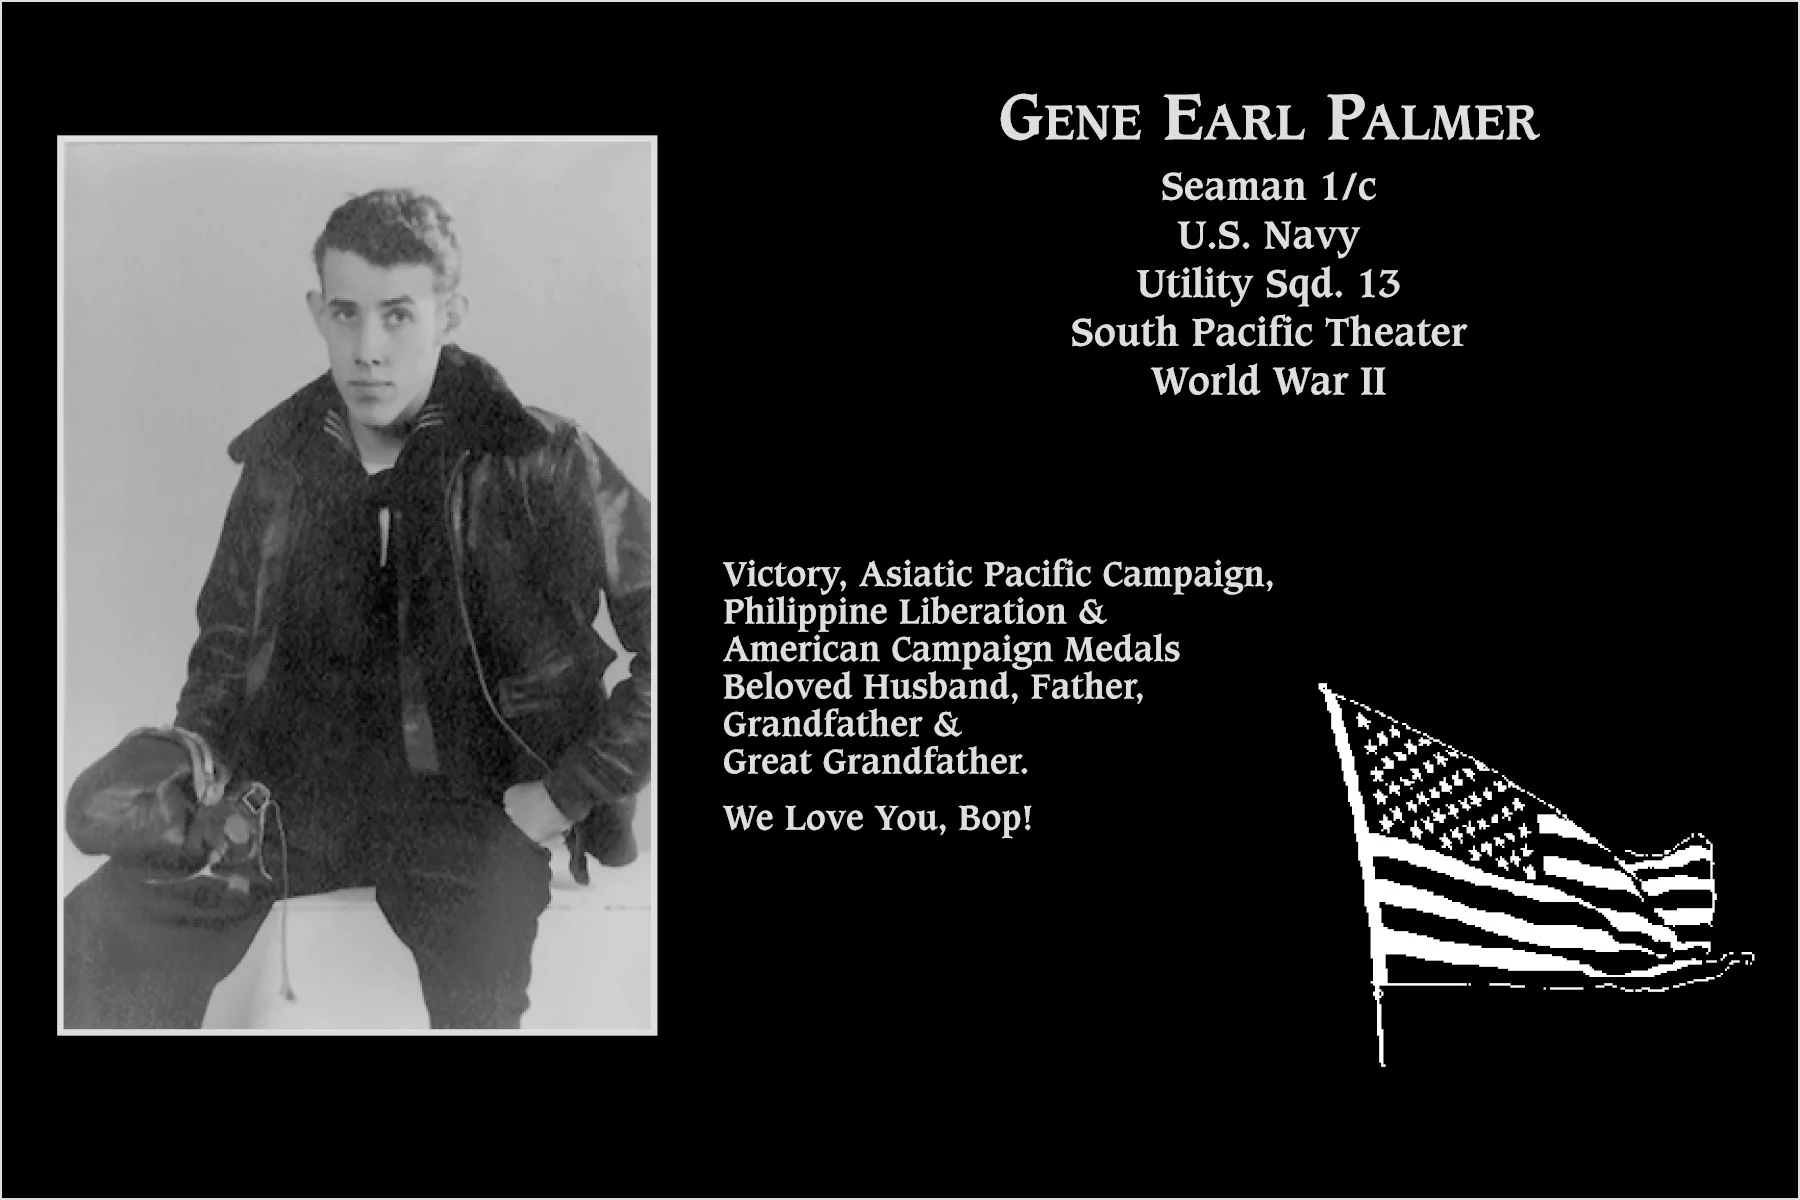 Gene Earl Palmer